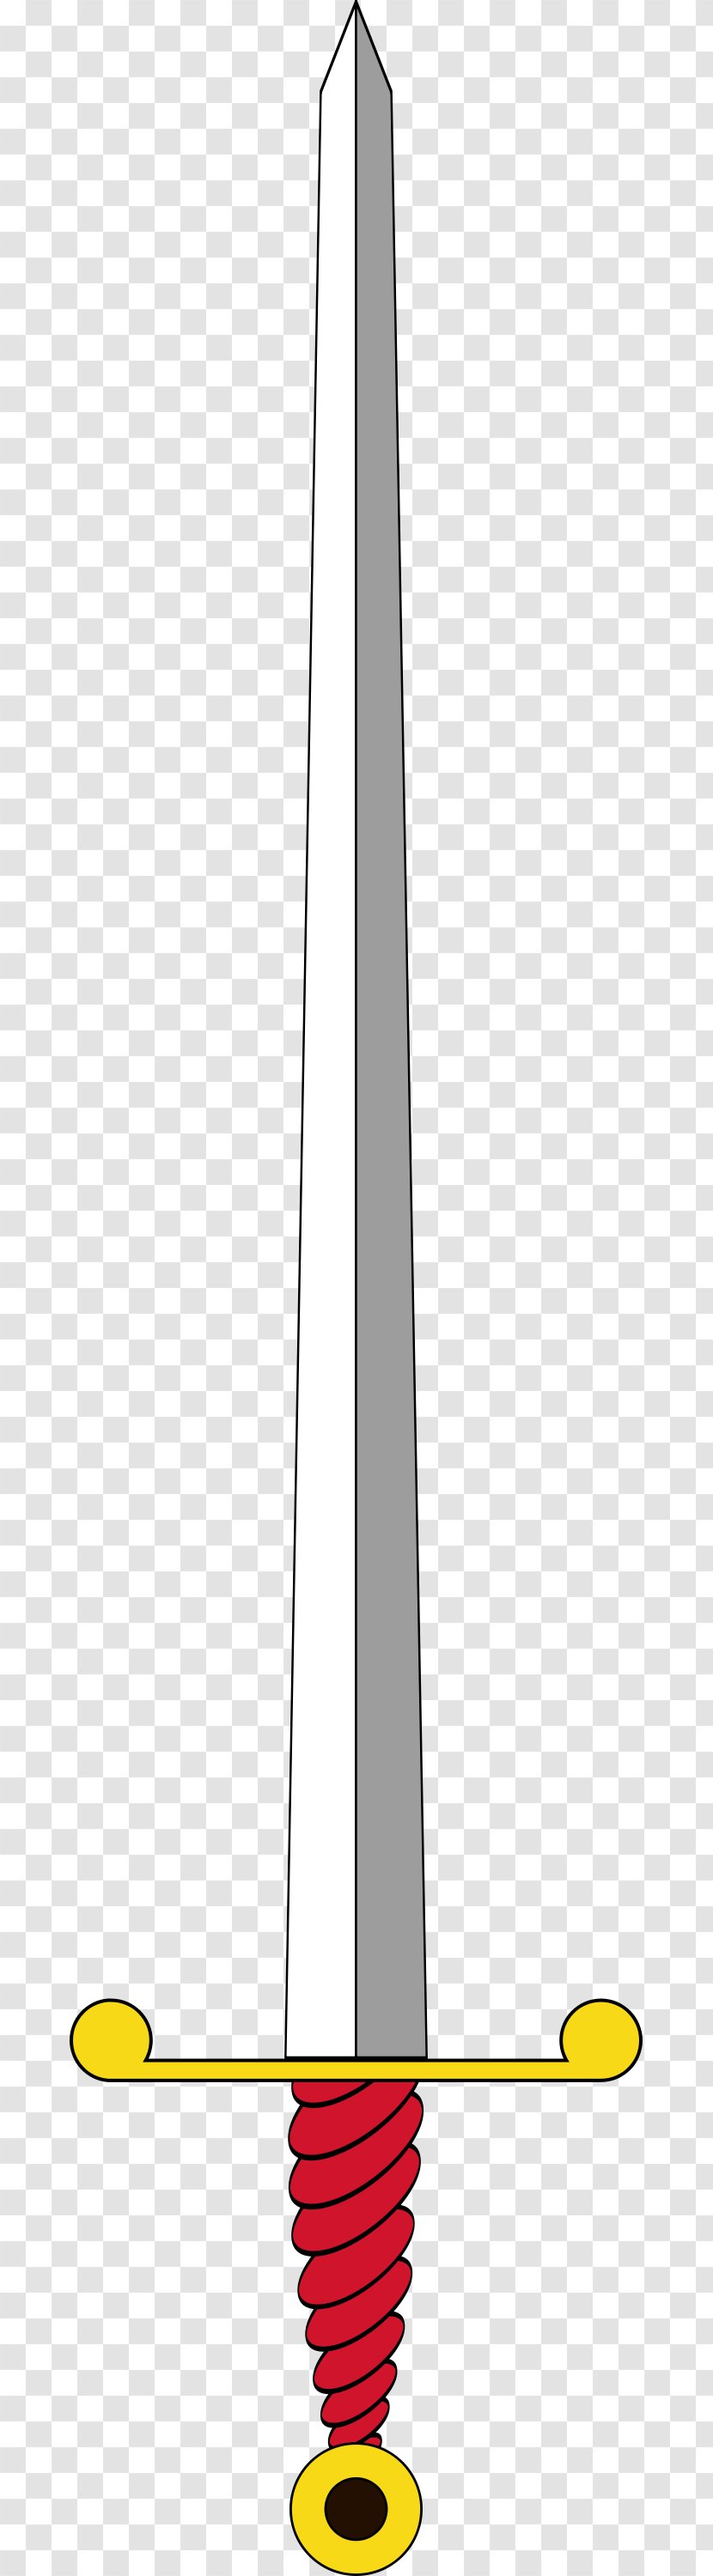 Sword Heraldry Clip Art - Wikimedia Foundation - Swords Transparent PNG